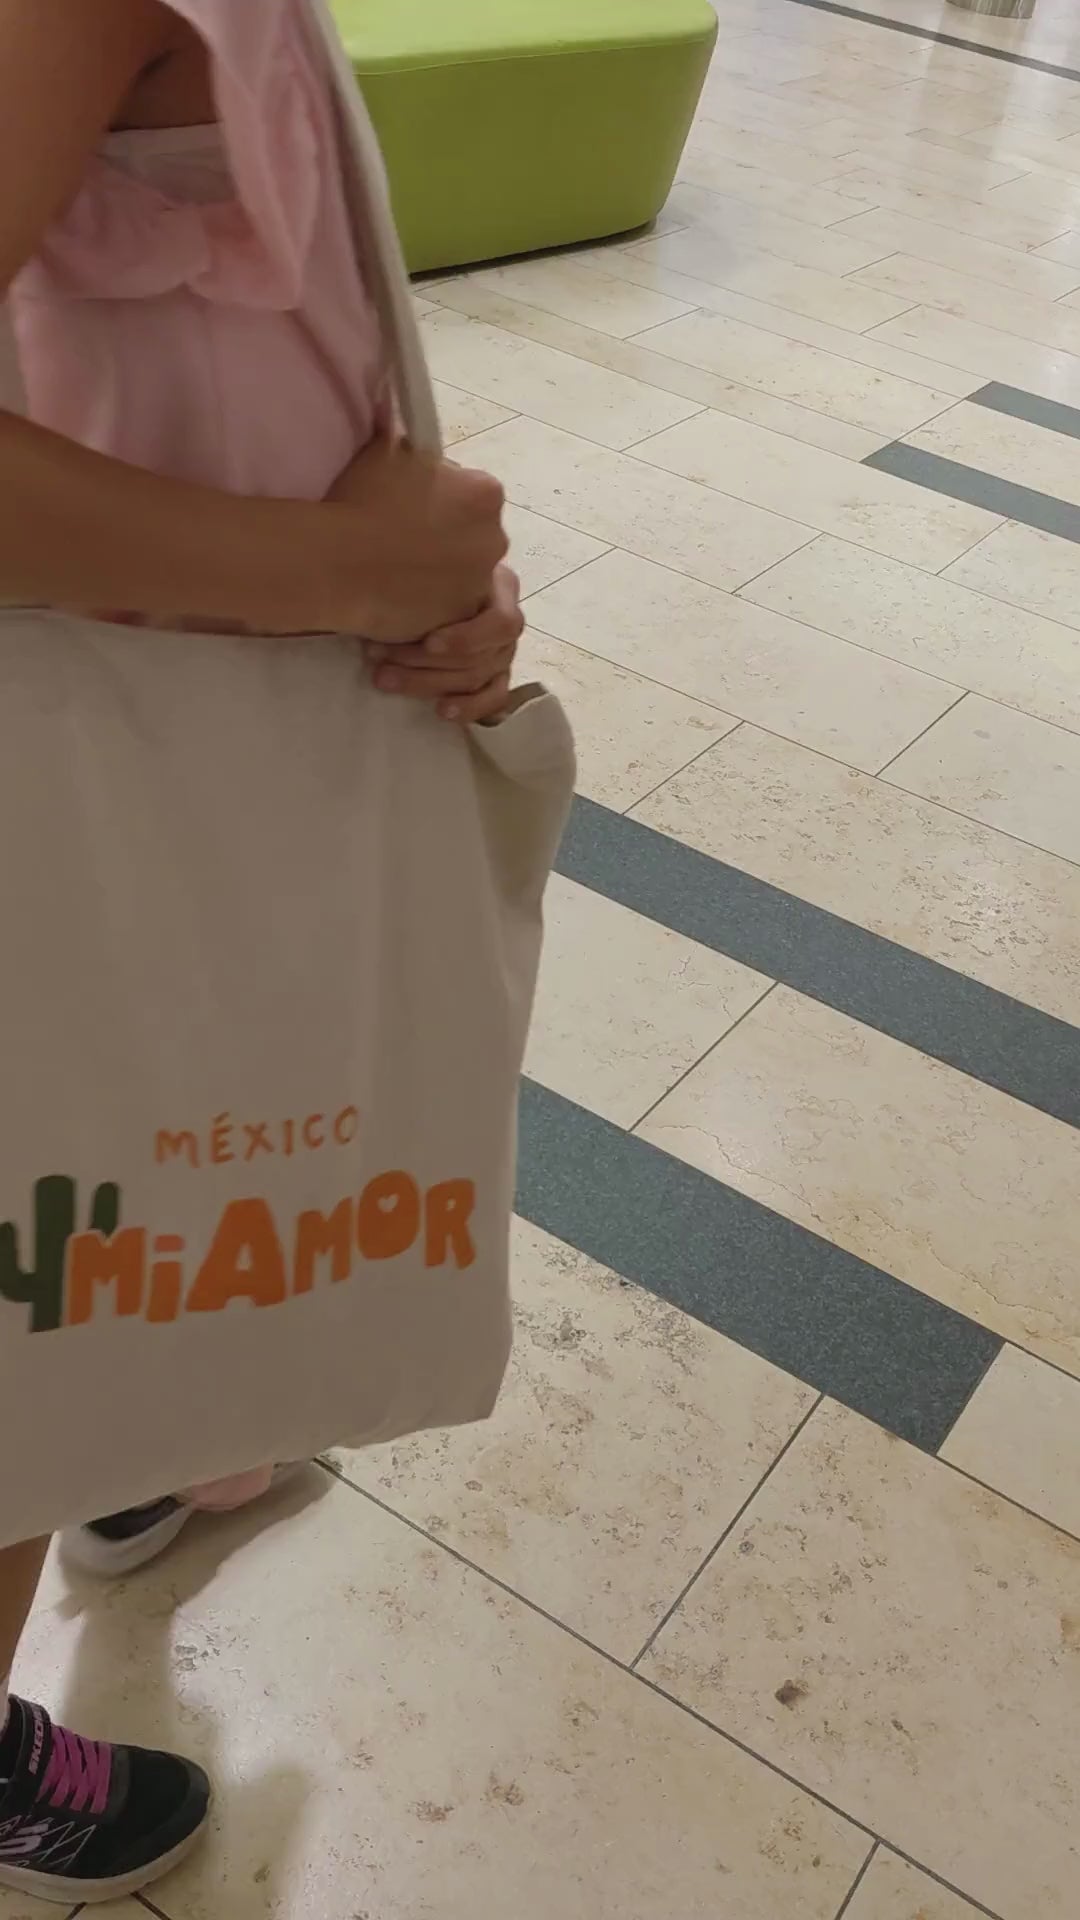 MexicoMiAmor Cloth Shopping Bag